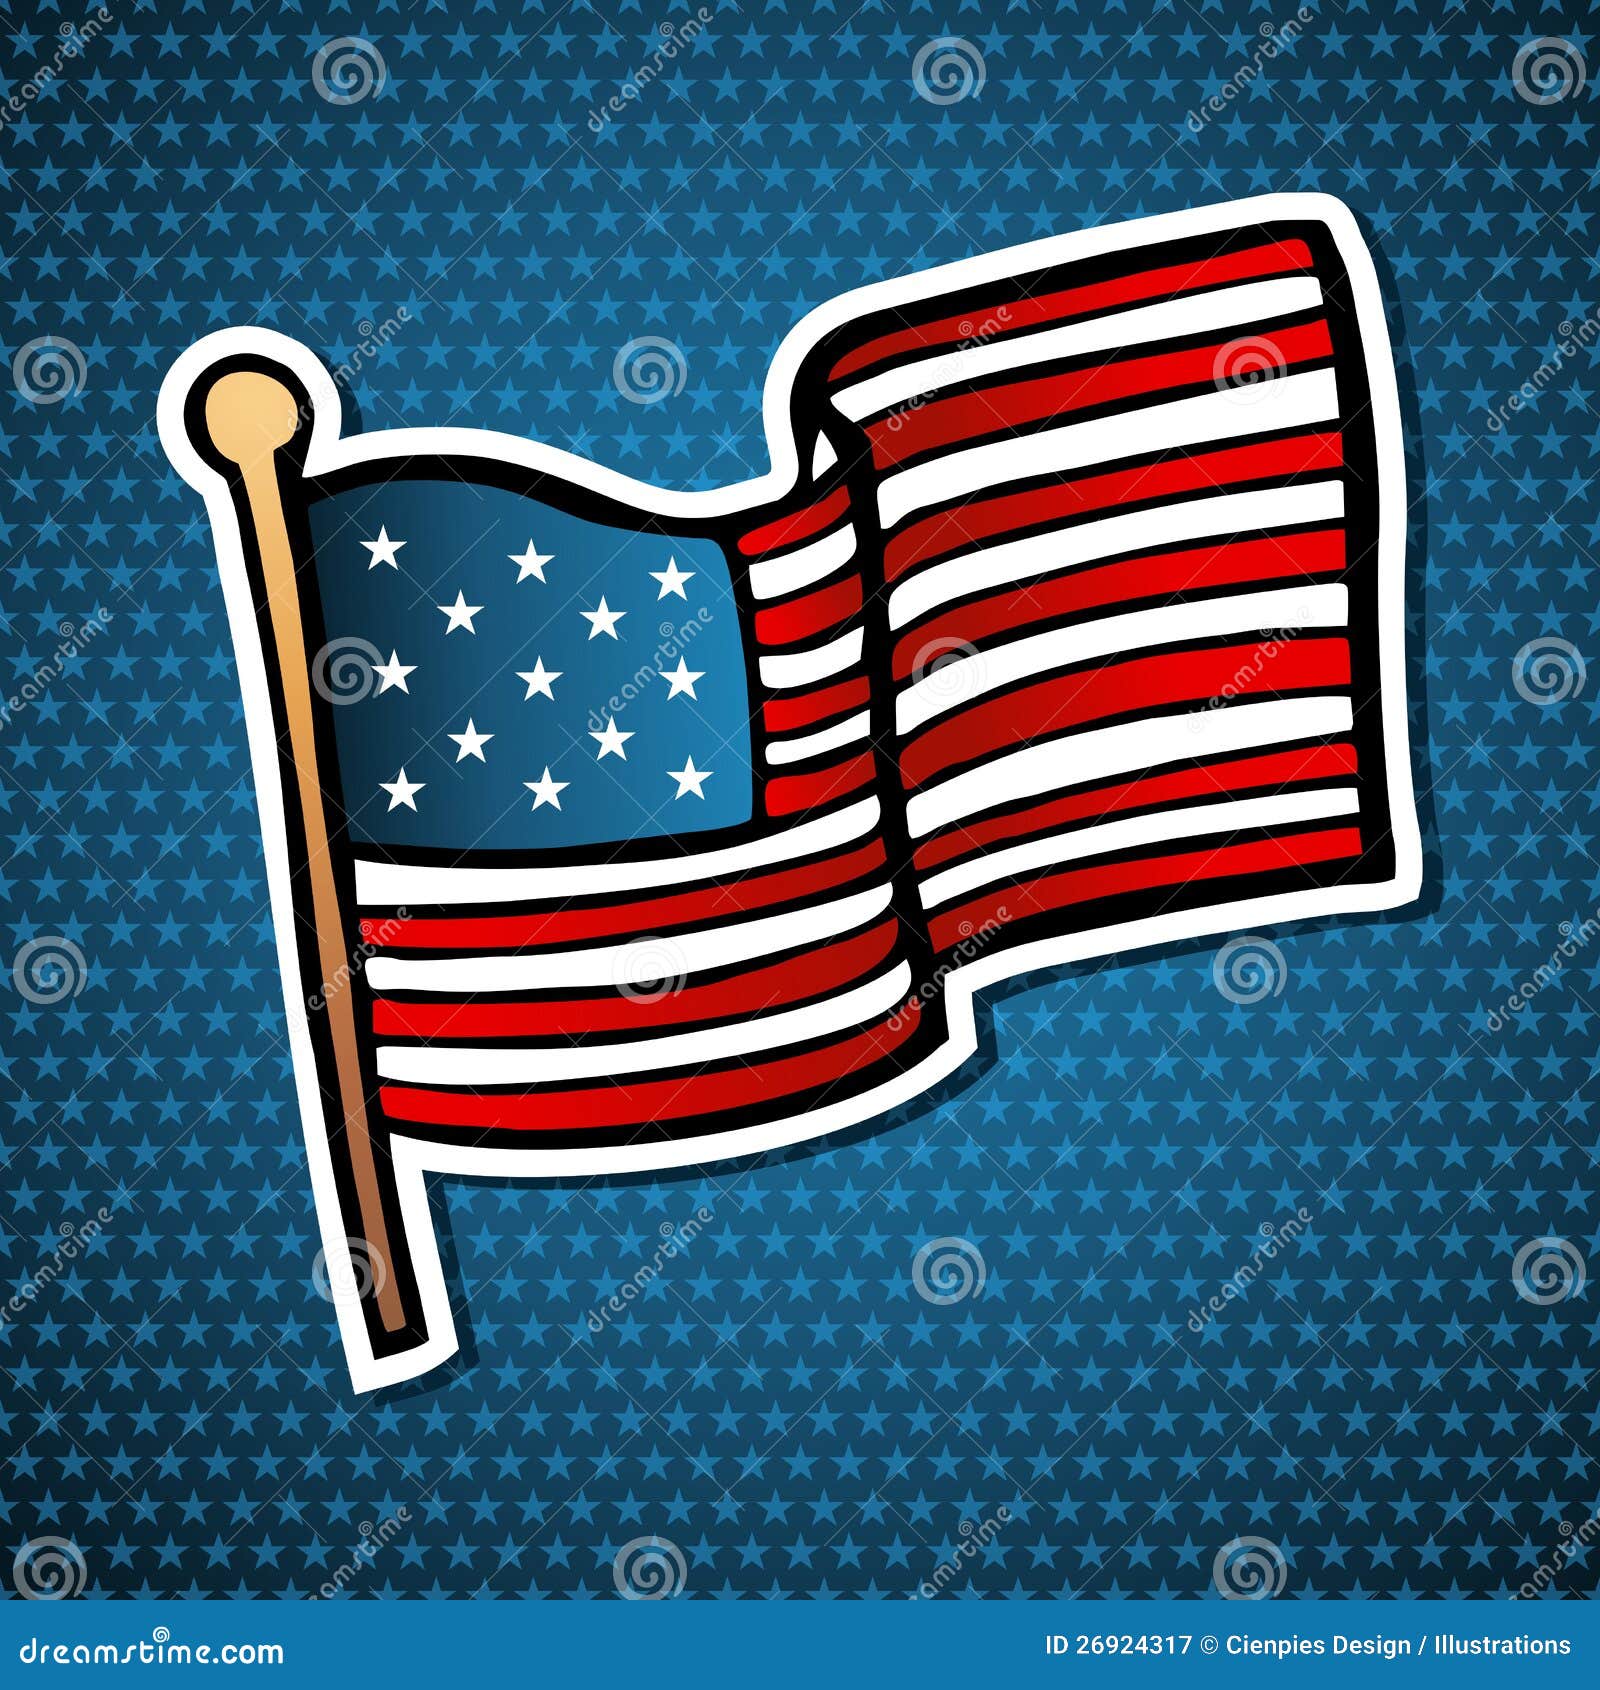 USA Cartoon Flag Royalty Free Stock Photography - Image: 26924317